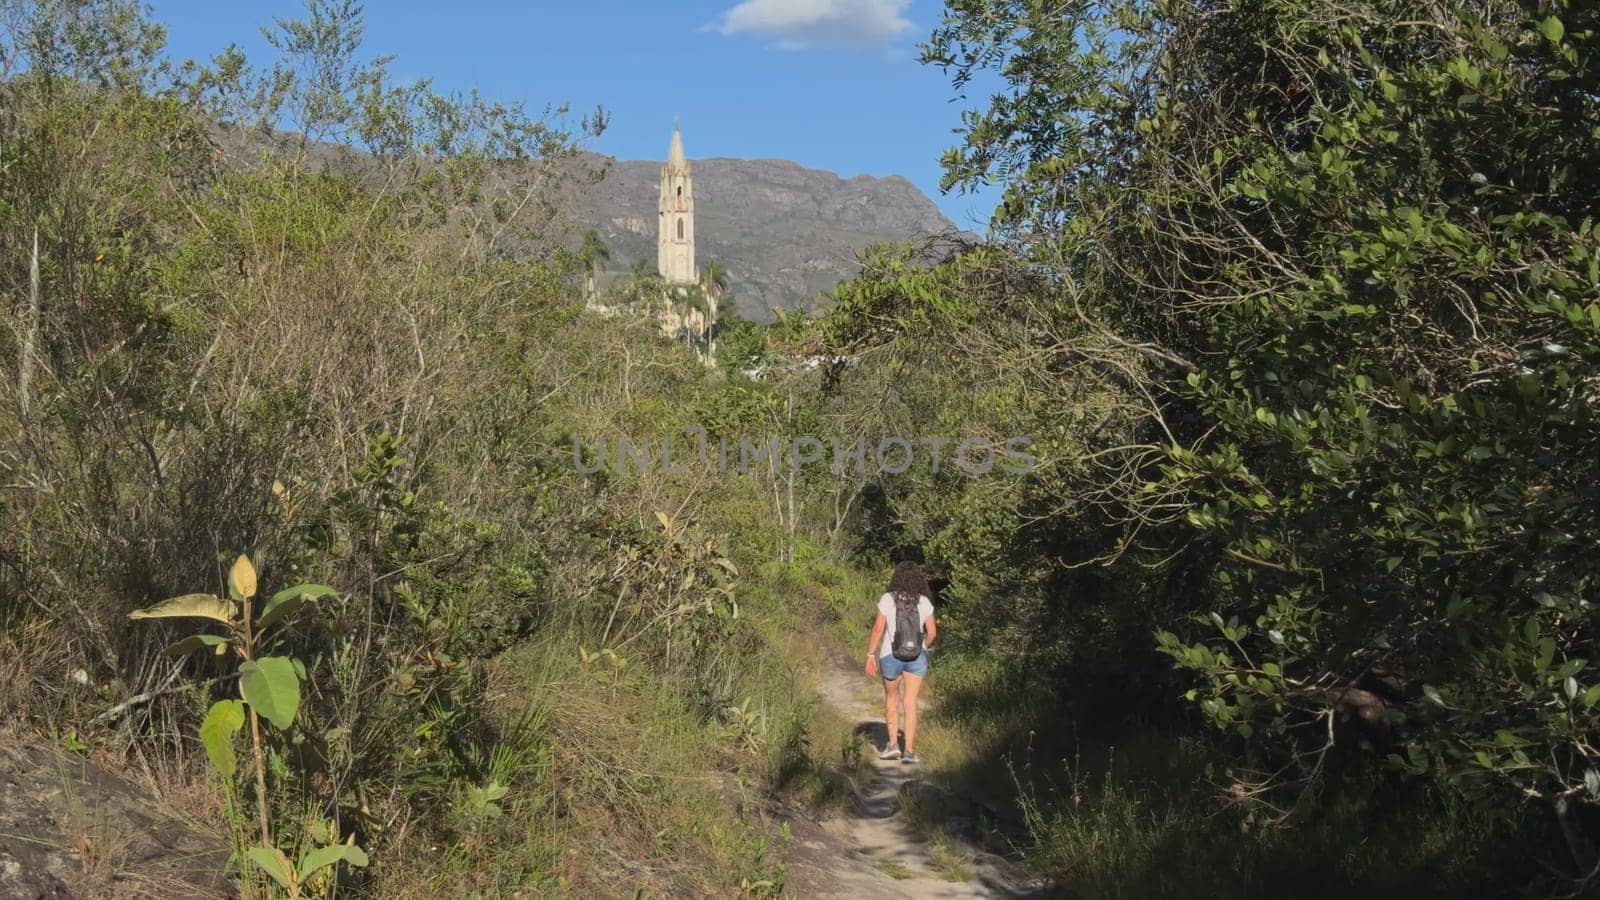 Hiker Walking on Trail Towards a Towering Church Steeple by FerradalFCG